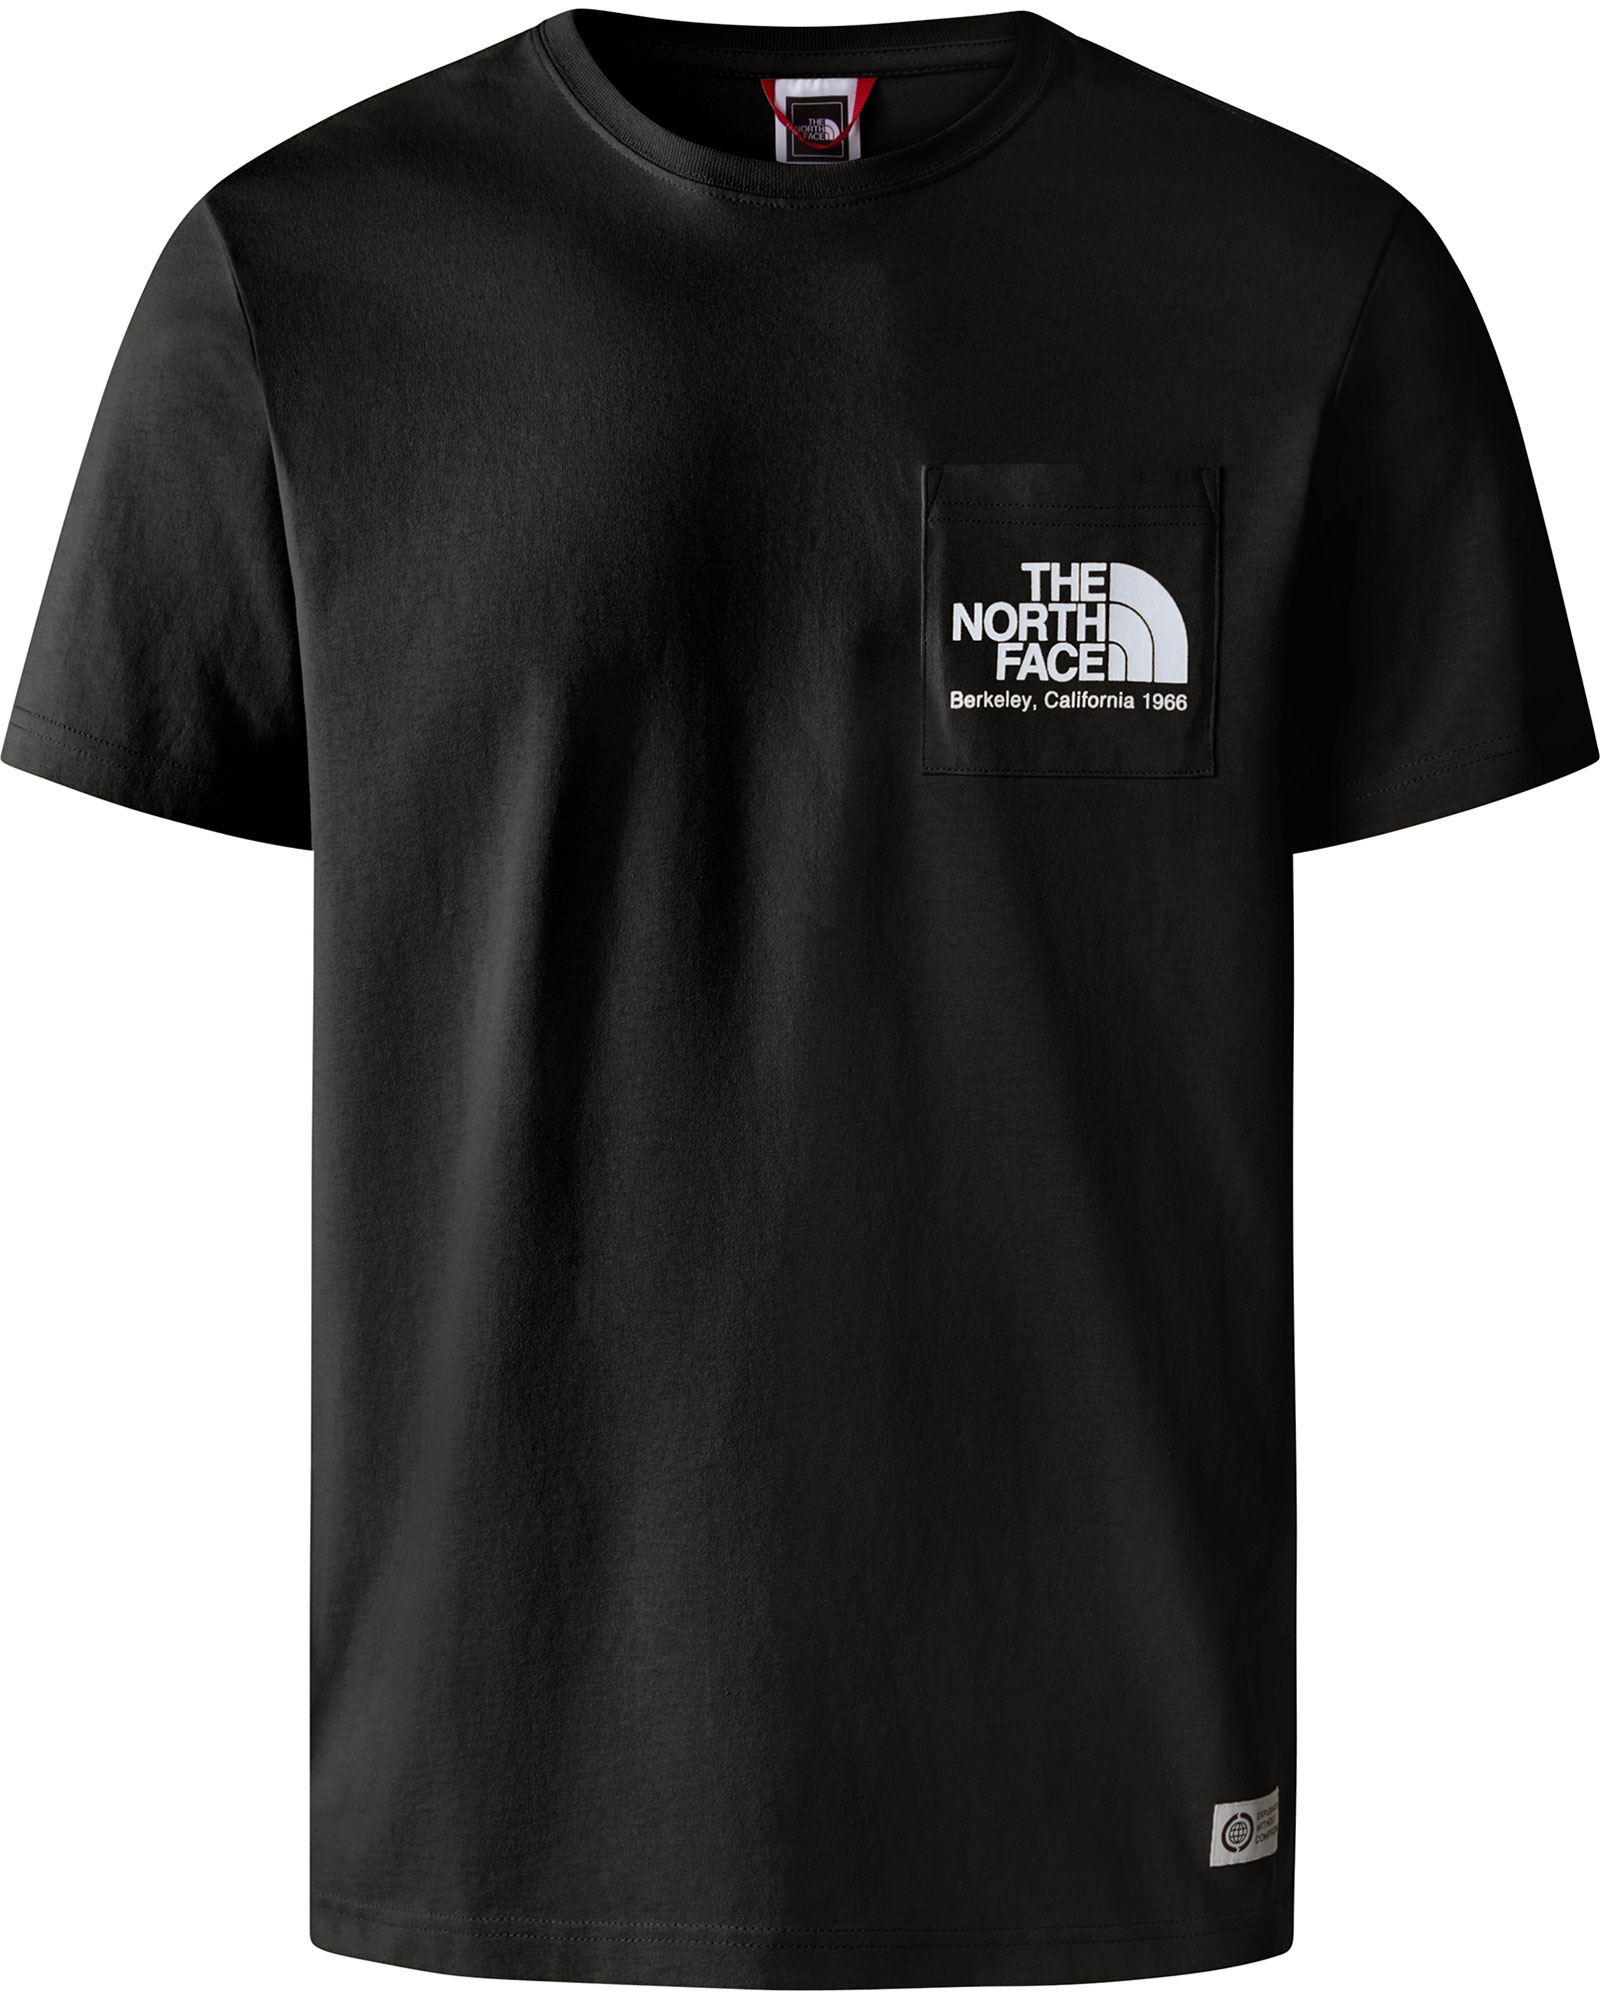 The North Face Men’s Berkeley California Pocket T Shirt - TNF Black S